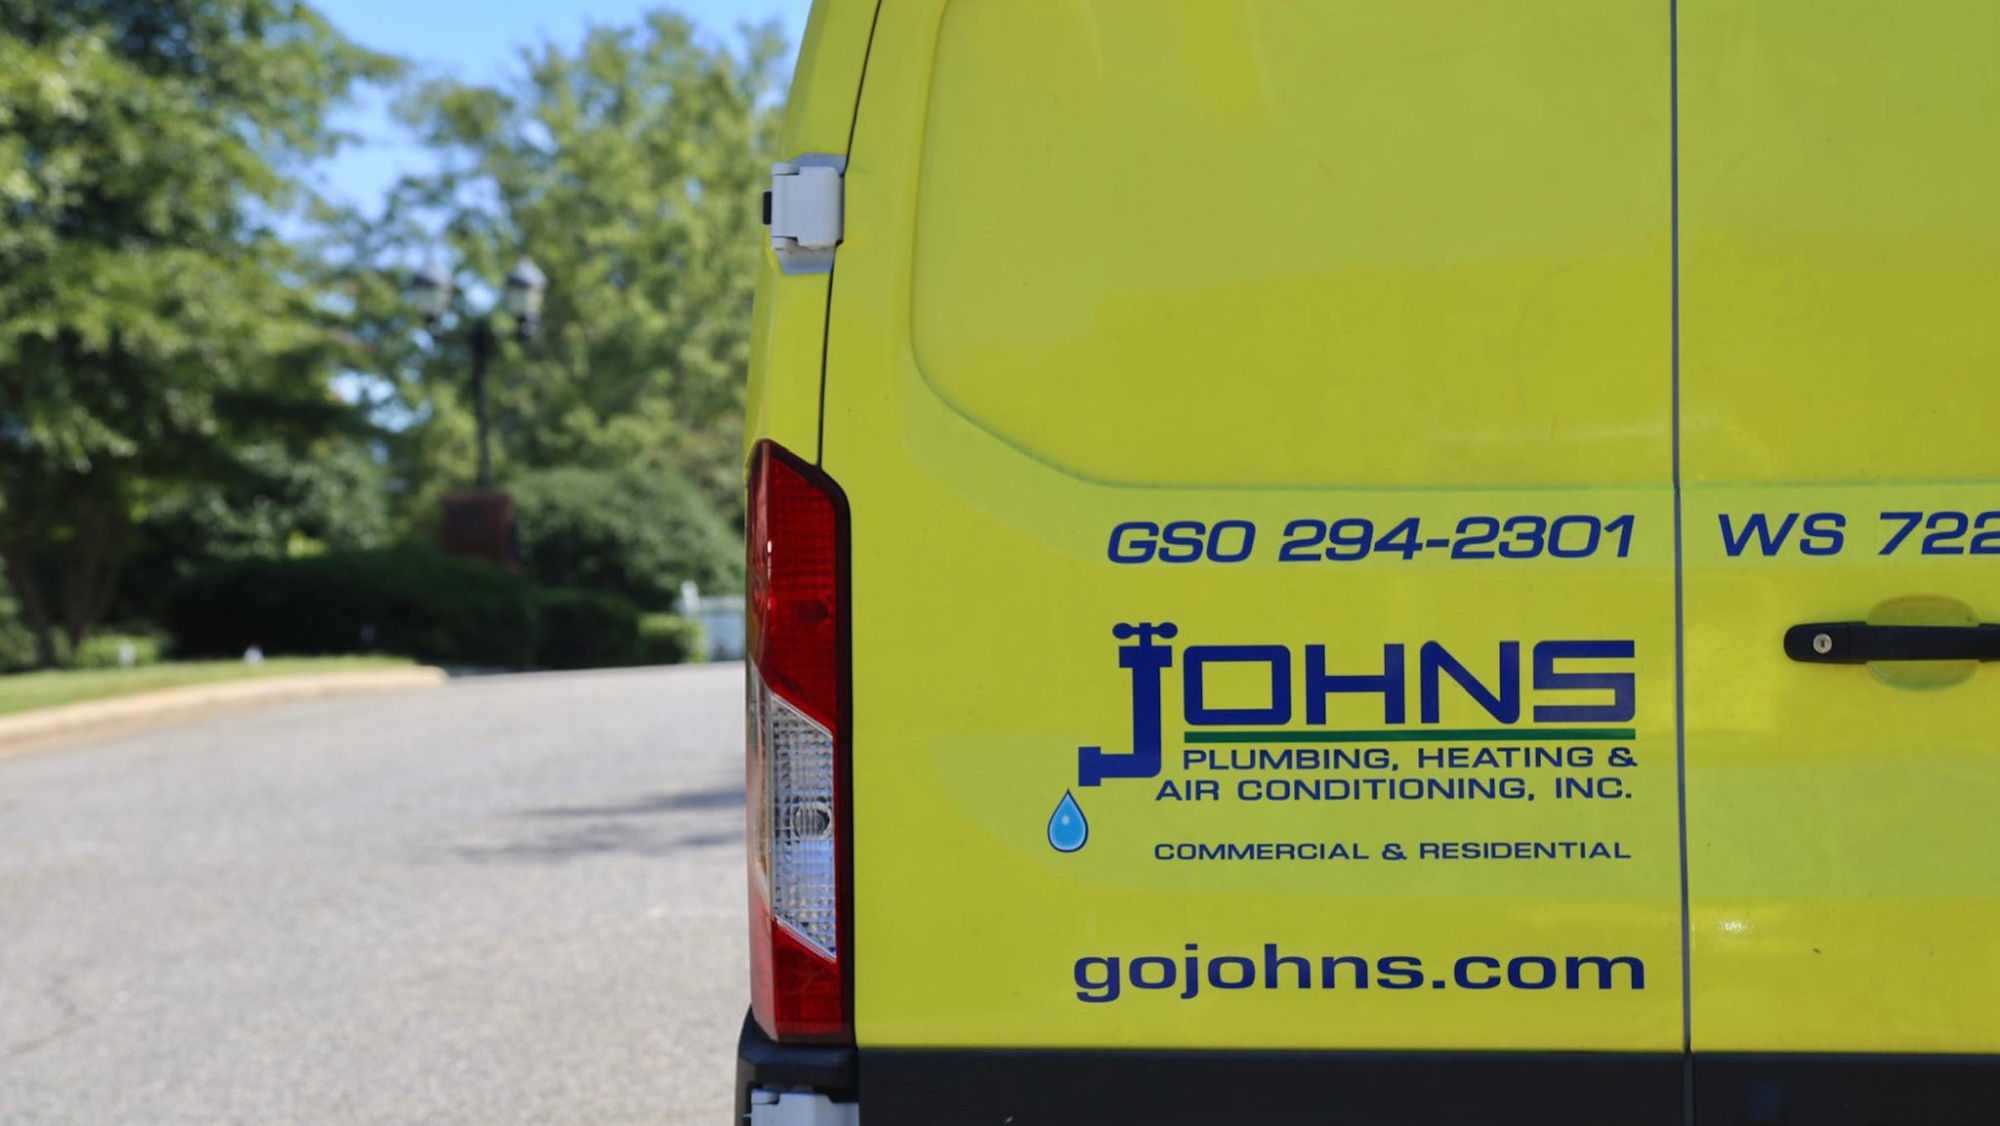 Johns Plumbing, Heating & Air Conditioning